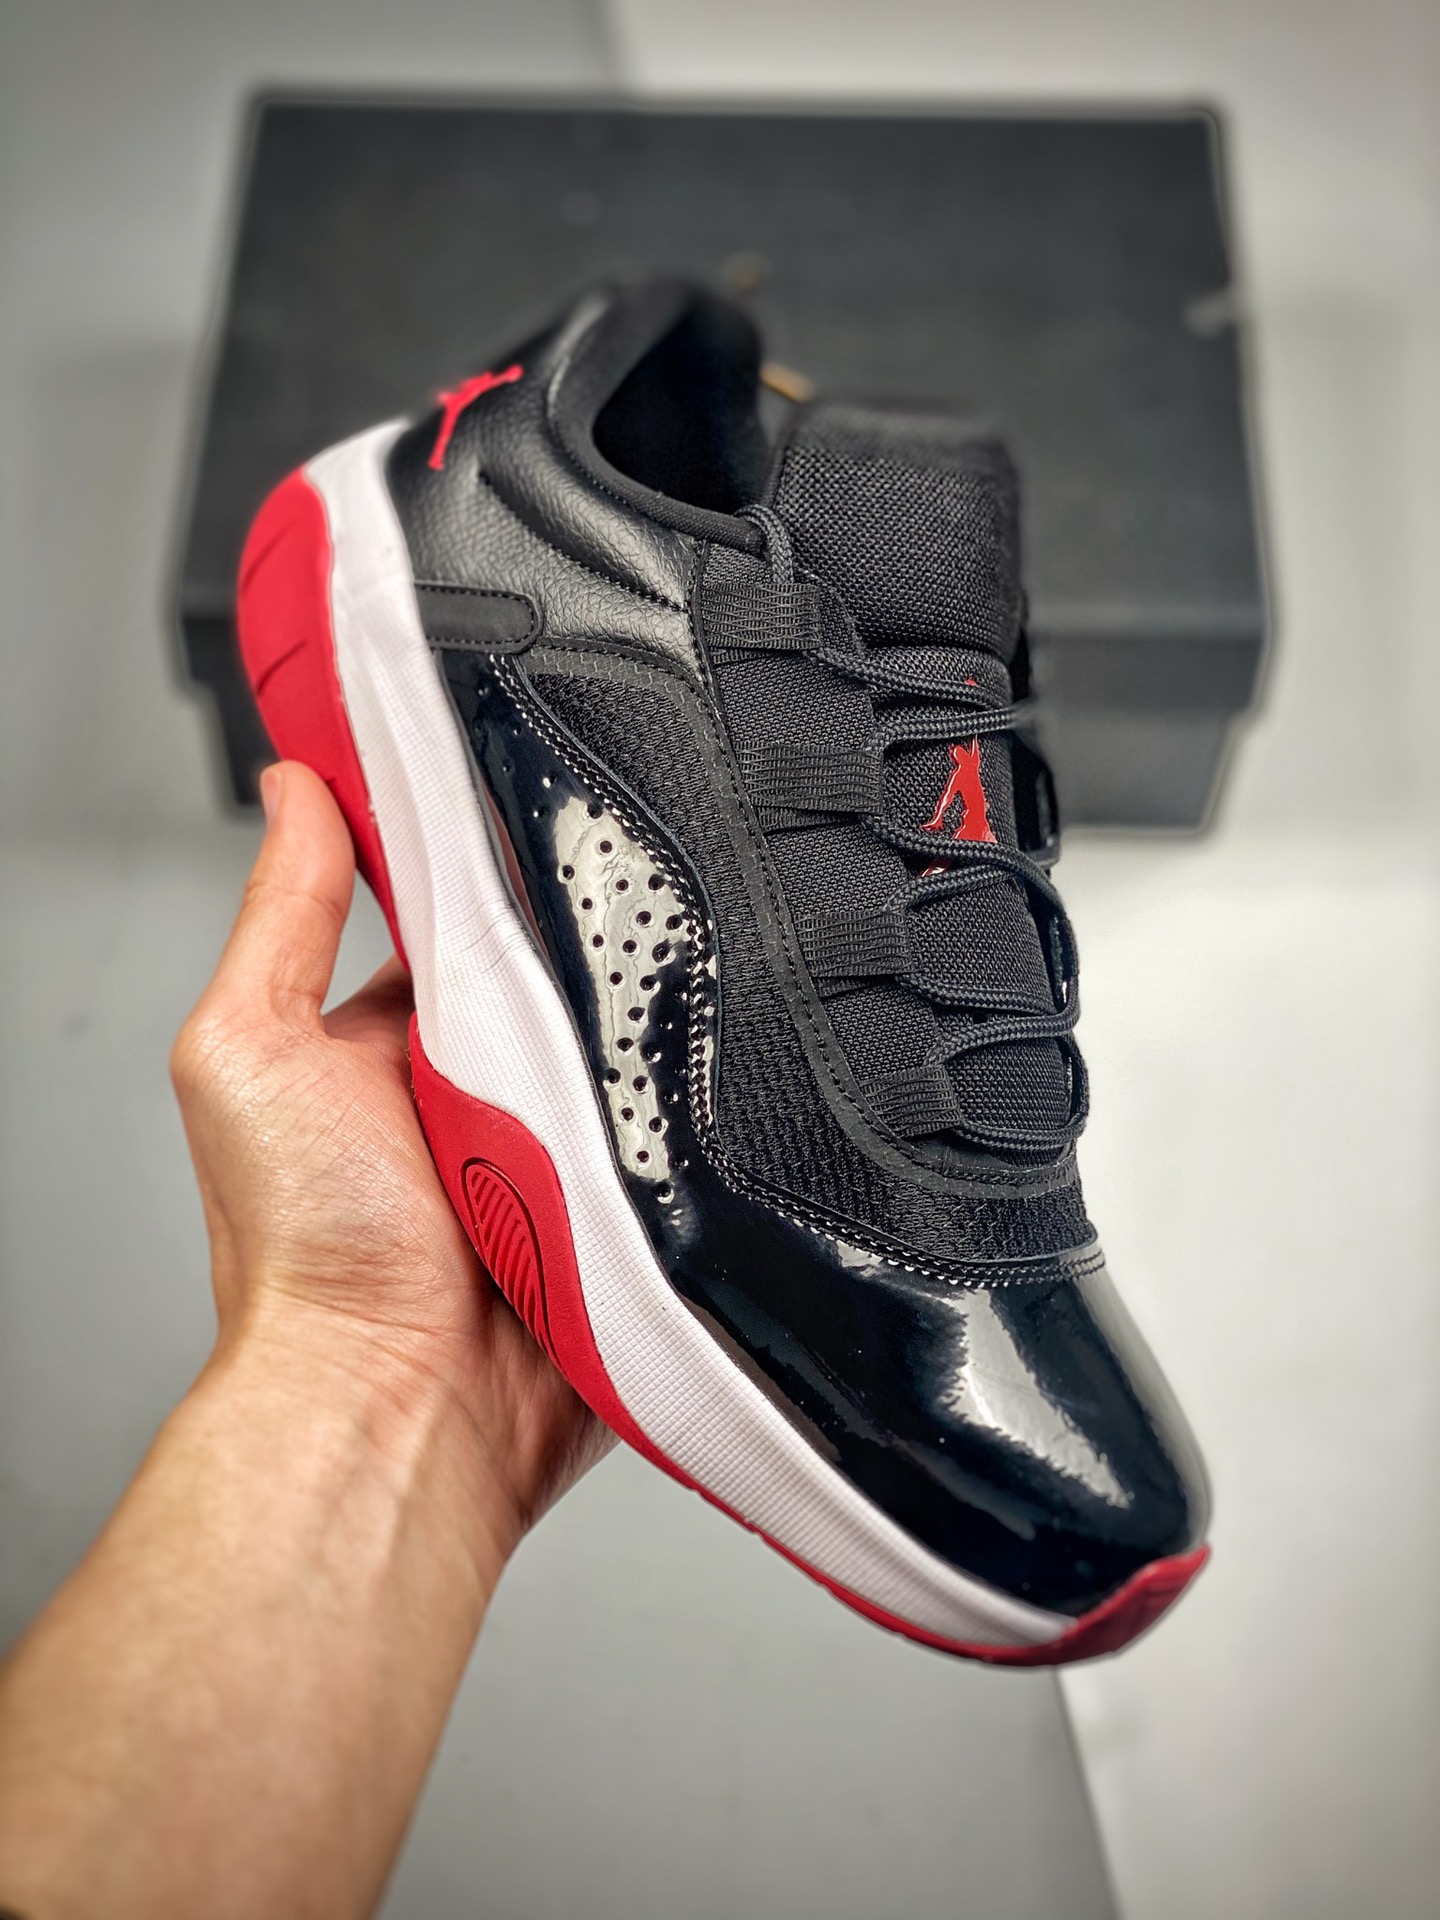 Air JD Jordan 11 CMFT Low 'Bred' Black/White-Gym Red Shoes